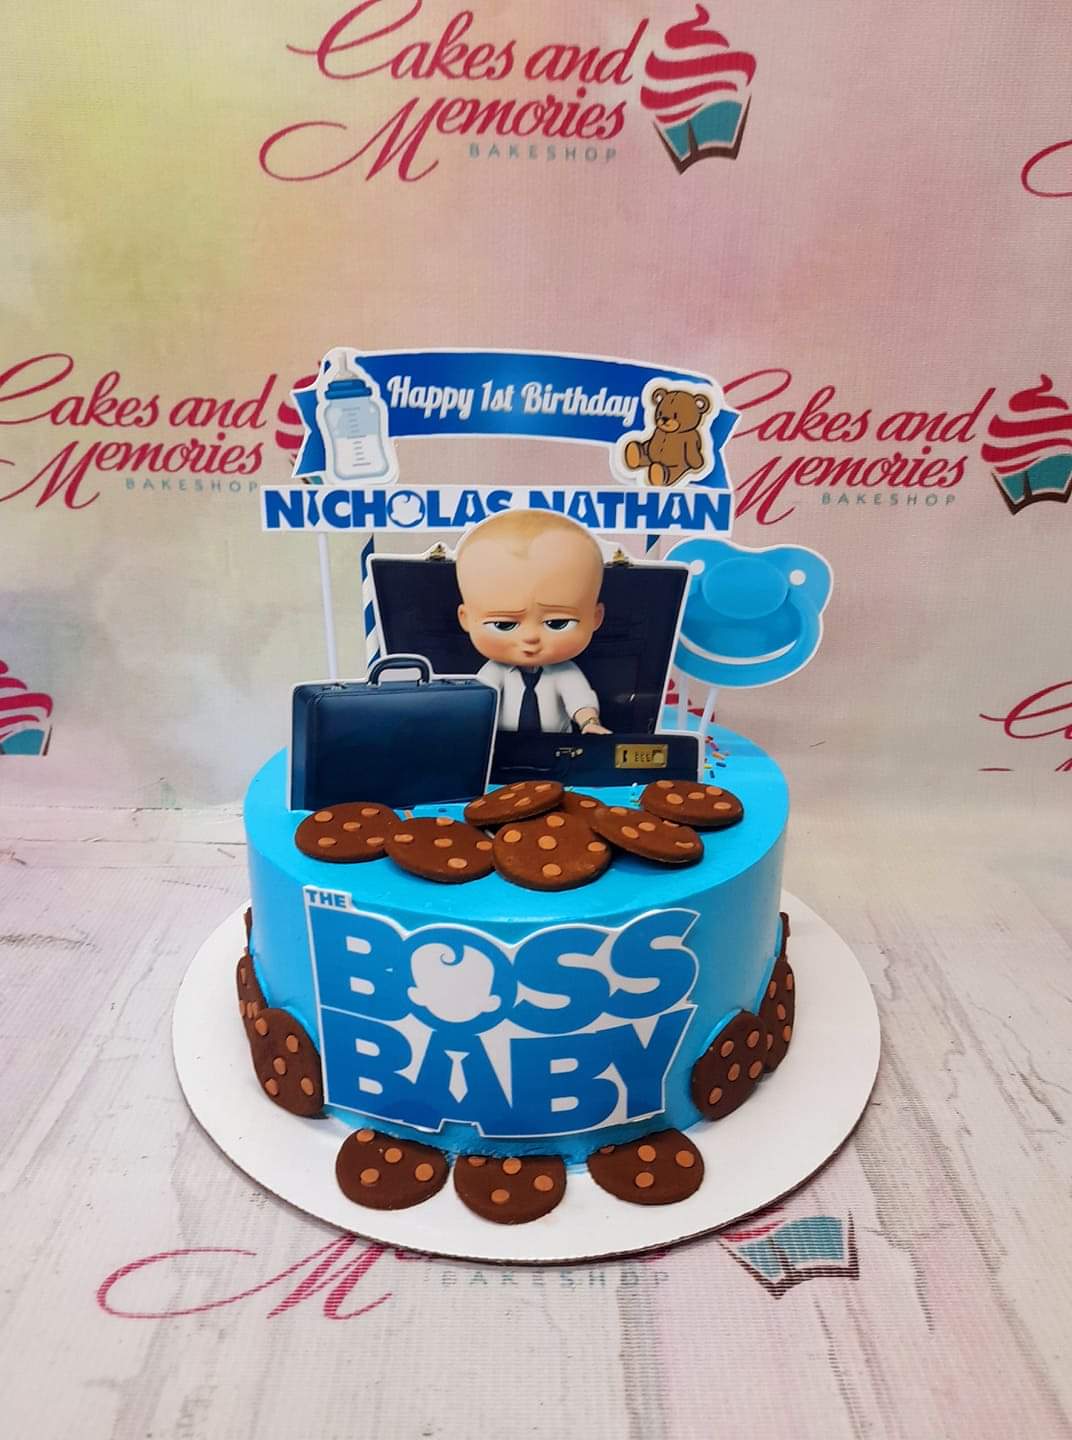 Boss baby new cake design first birthday 2 kg